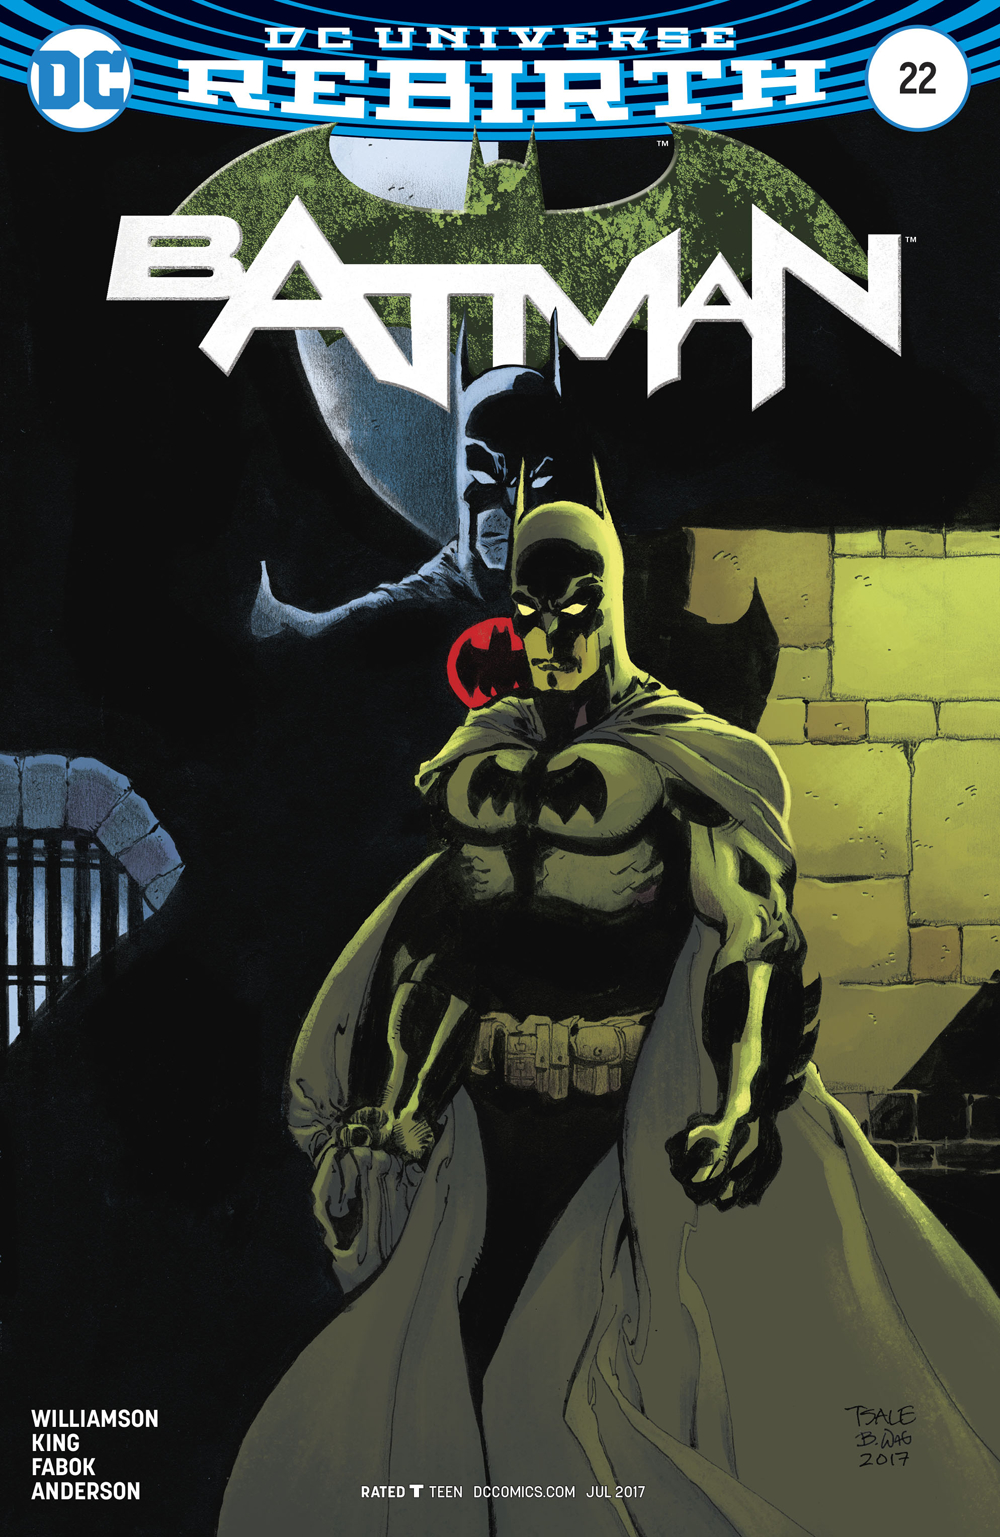 NOV169206 - BATMAN #22 VAR ED (THE BUTTON) - Free Comic Book Day